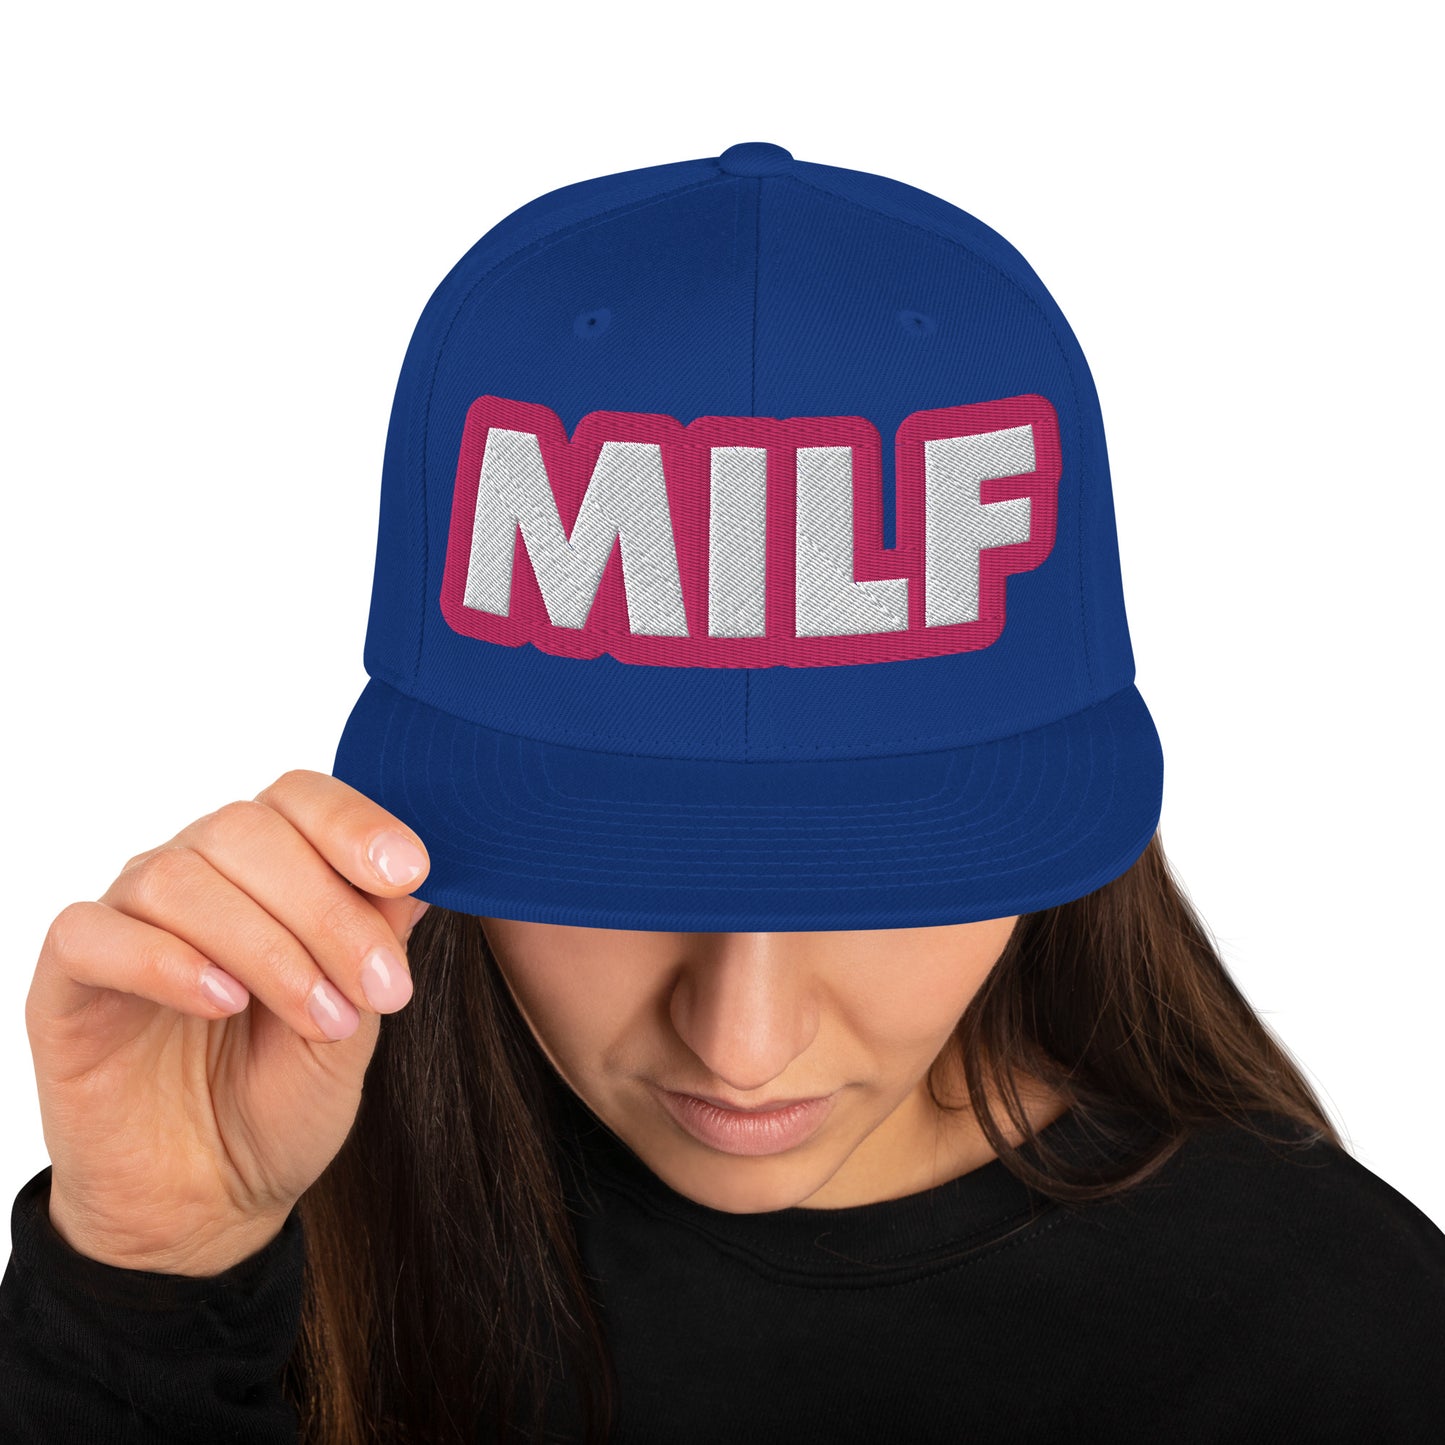 "MILF" Snapback lippis